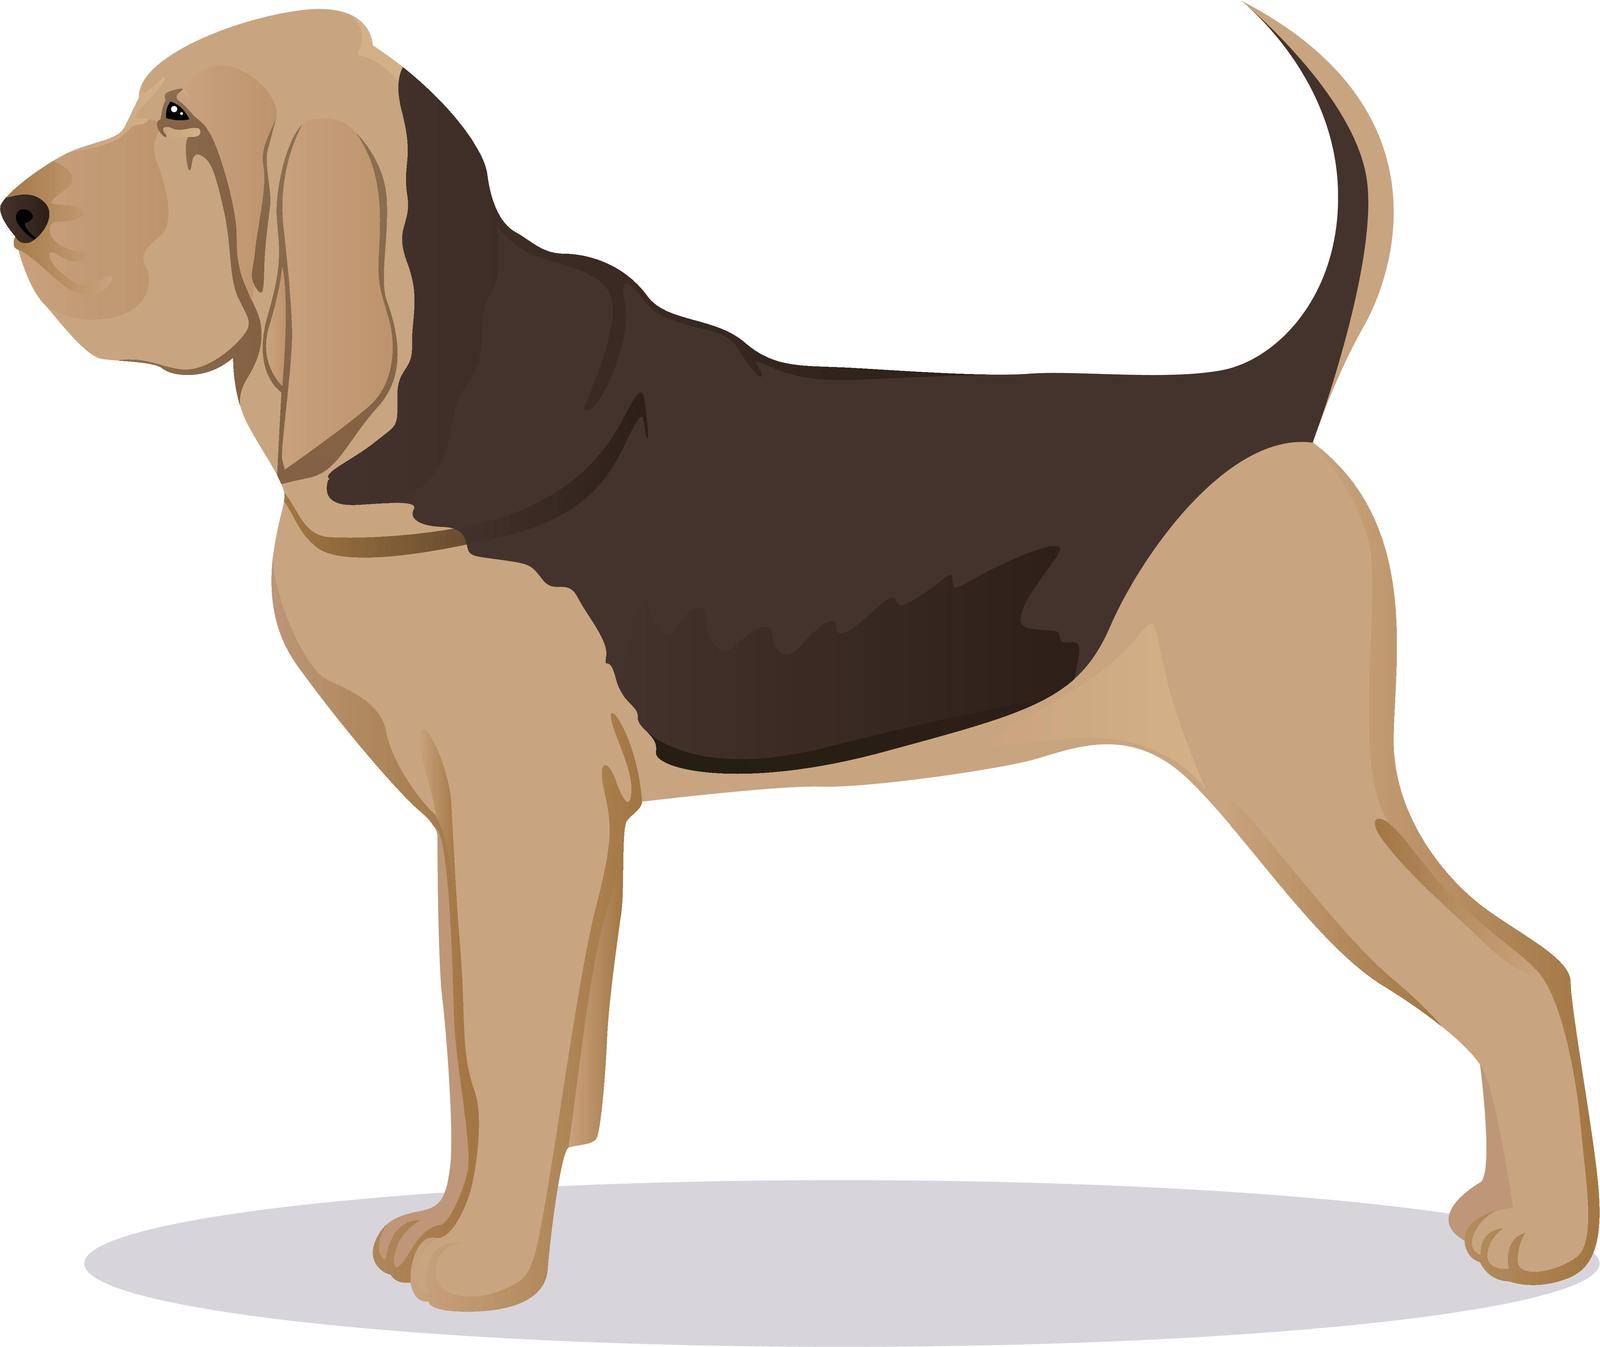 Bloodhound dog vector illustration